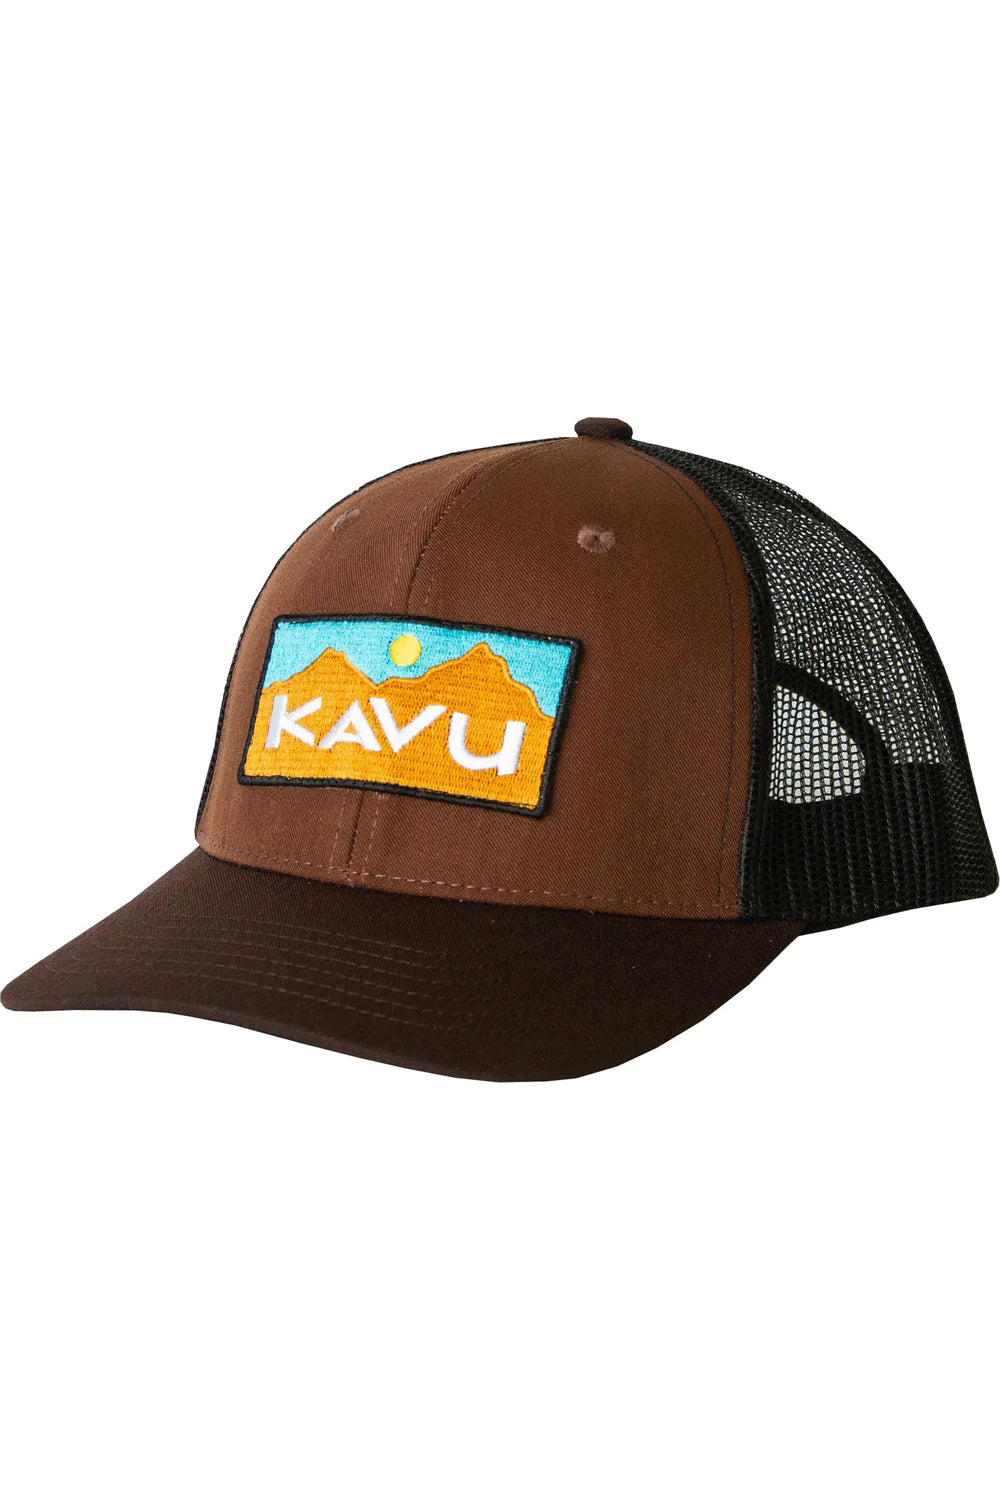 Kavu - Trucker Above Standard Rise & Shine